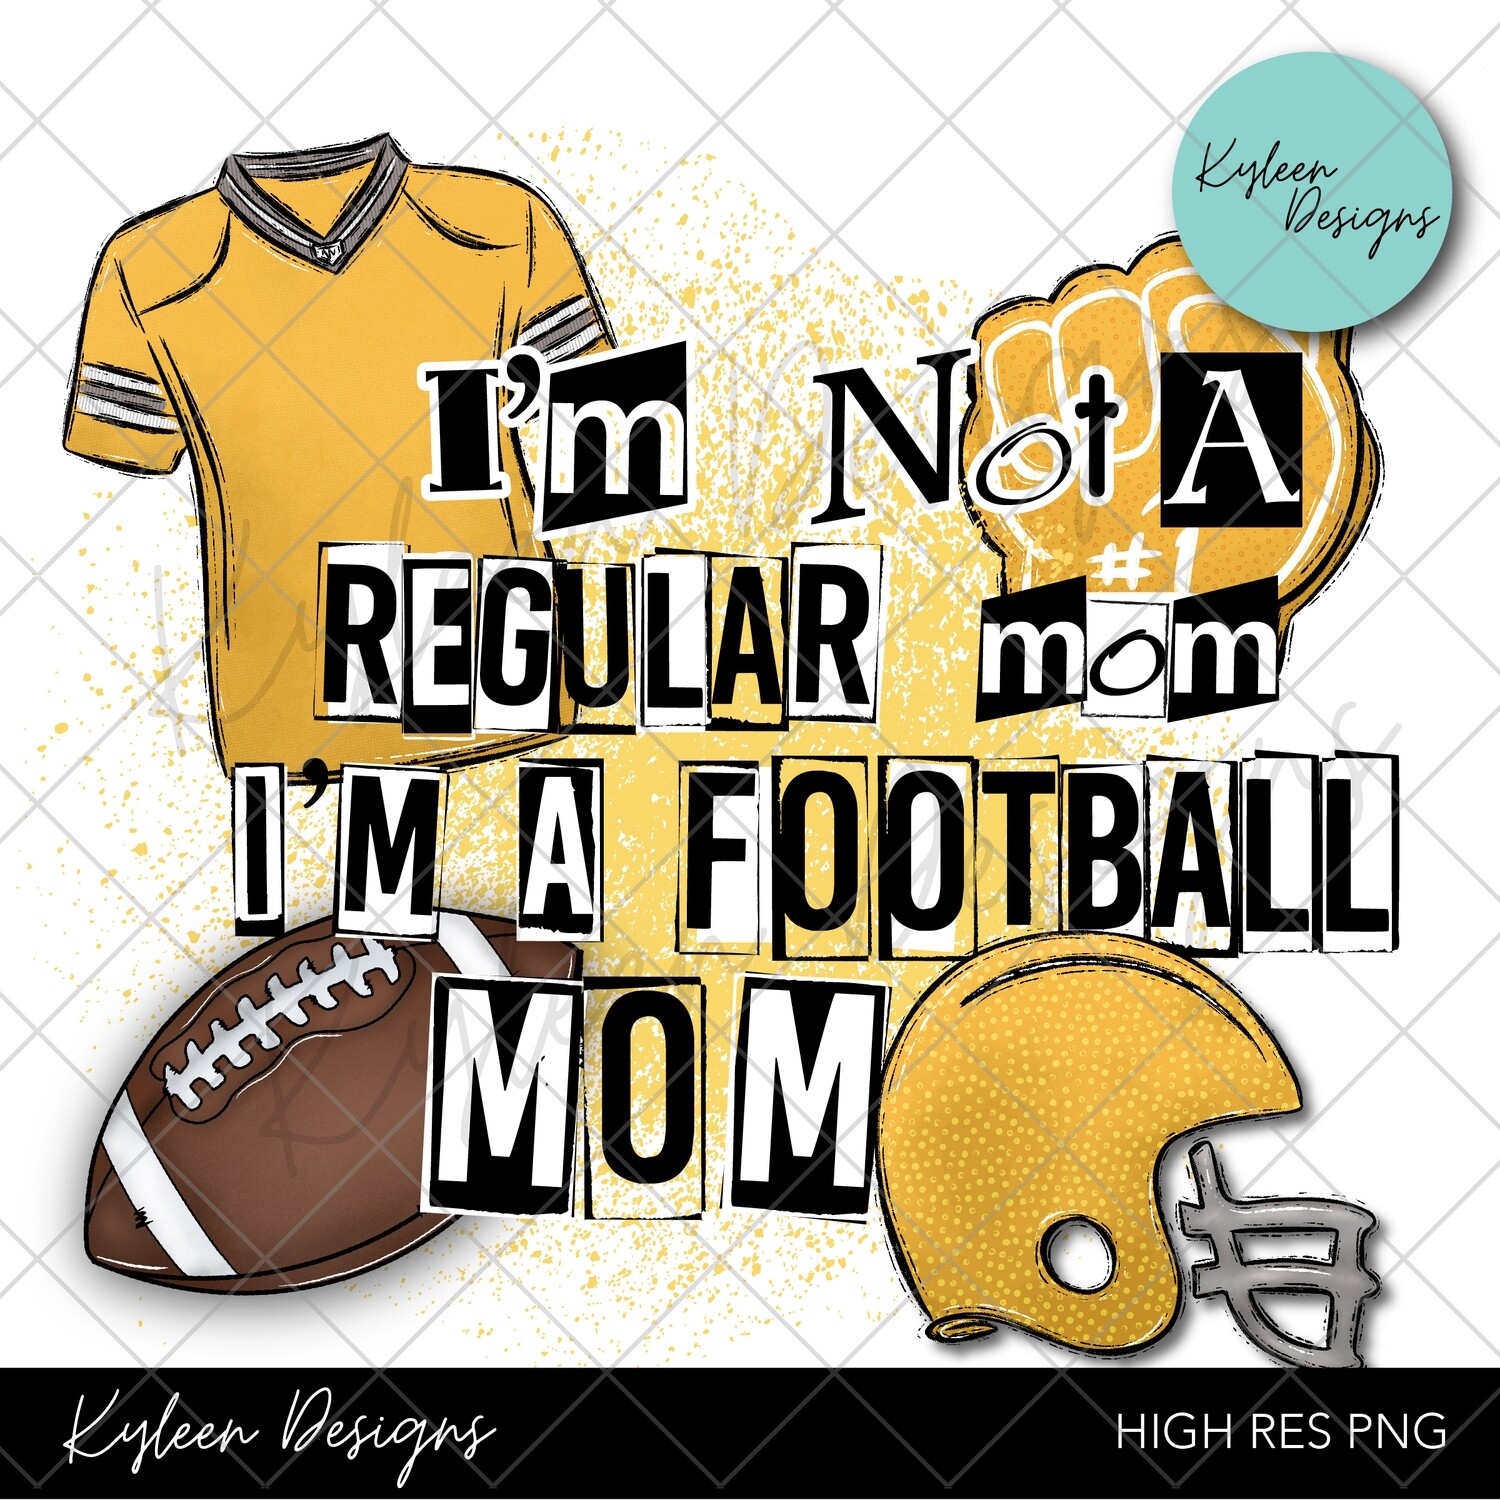 I'm not a regular mom I'm a football mom High Res PNG 300 DPI file